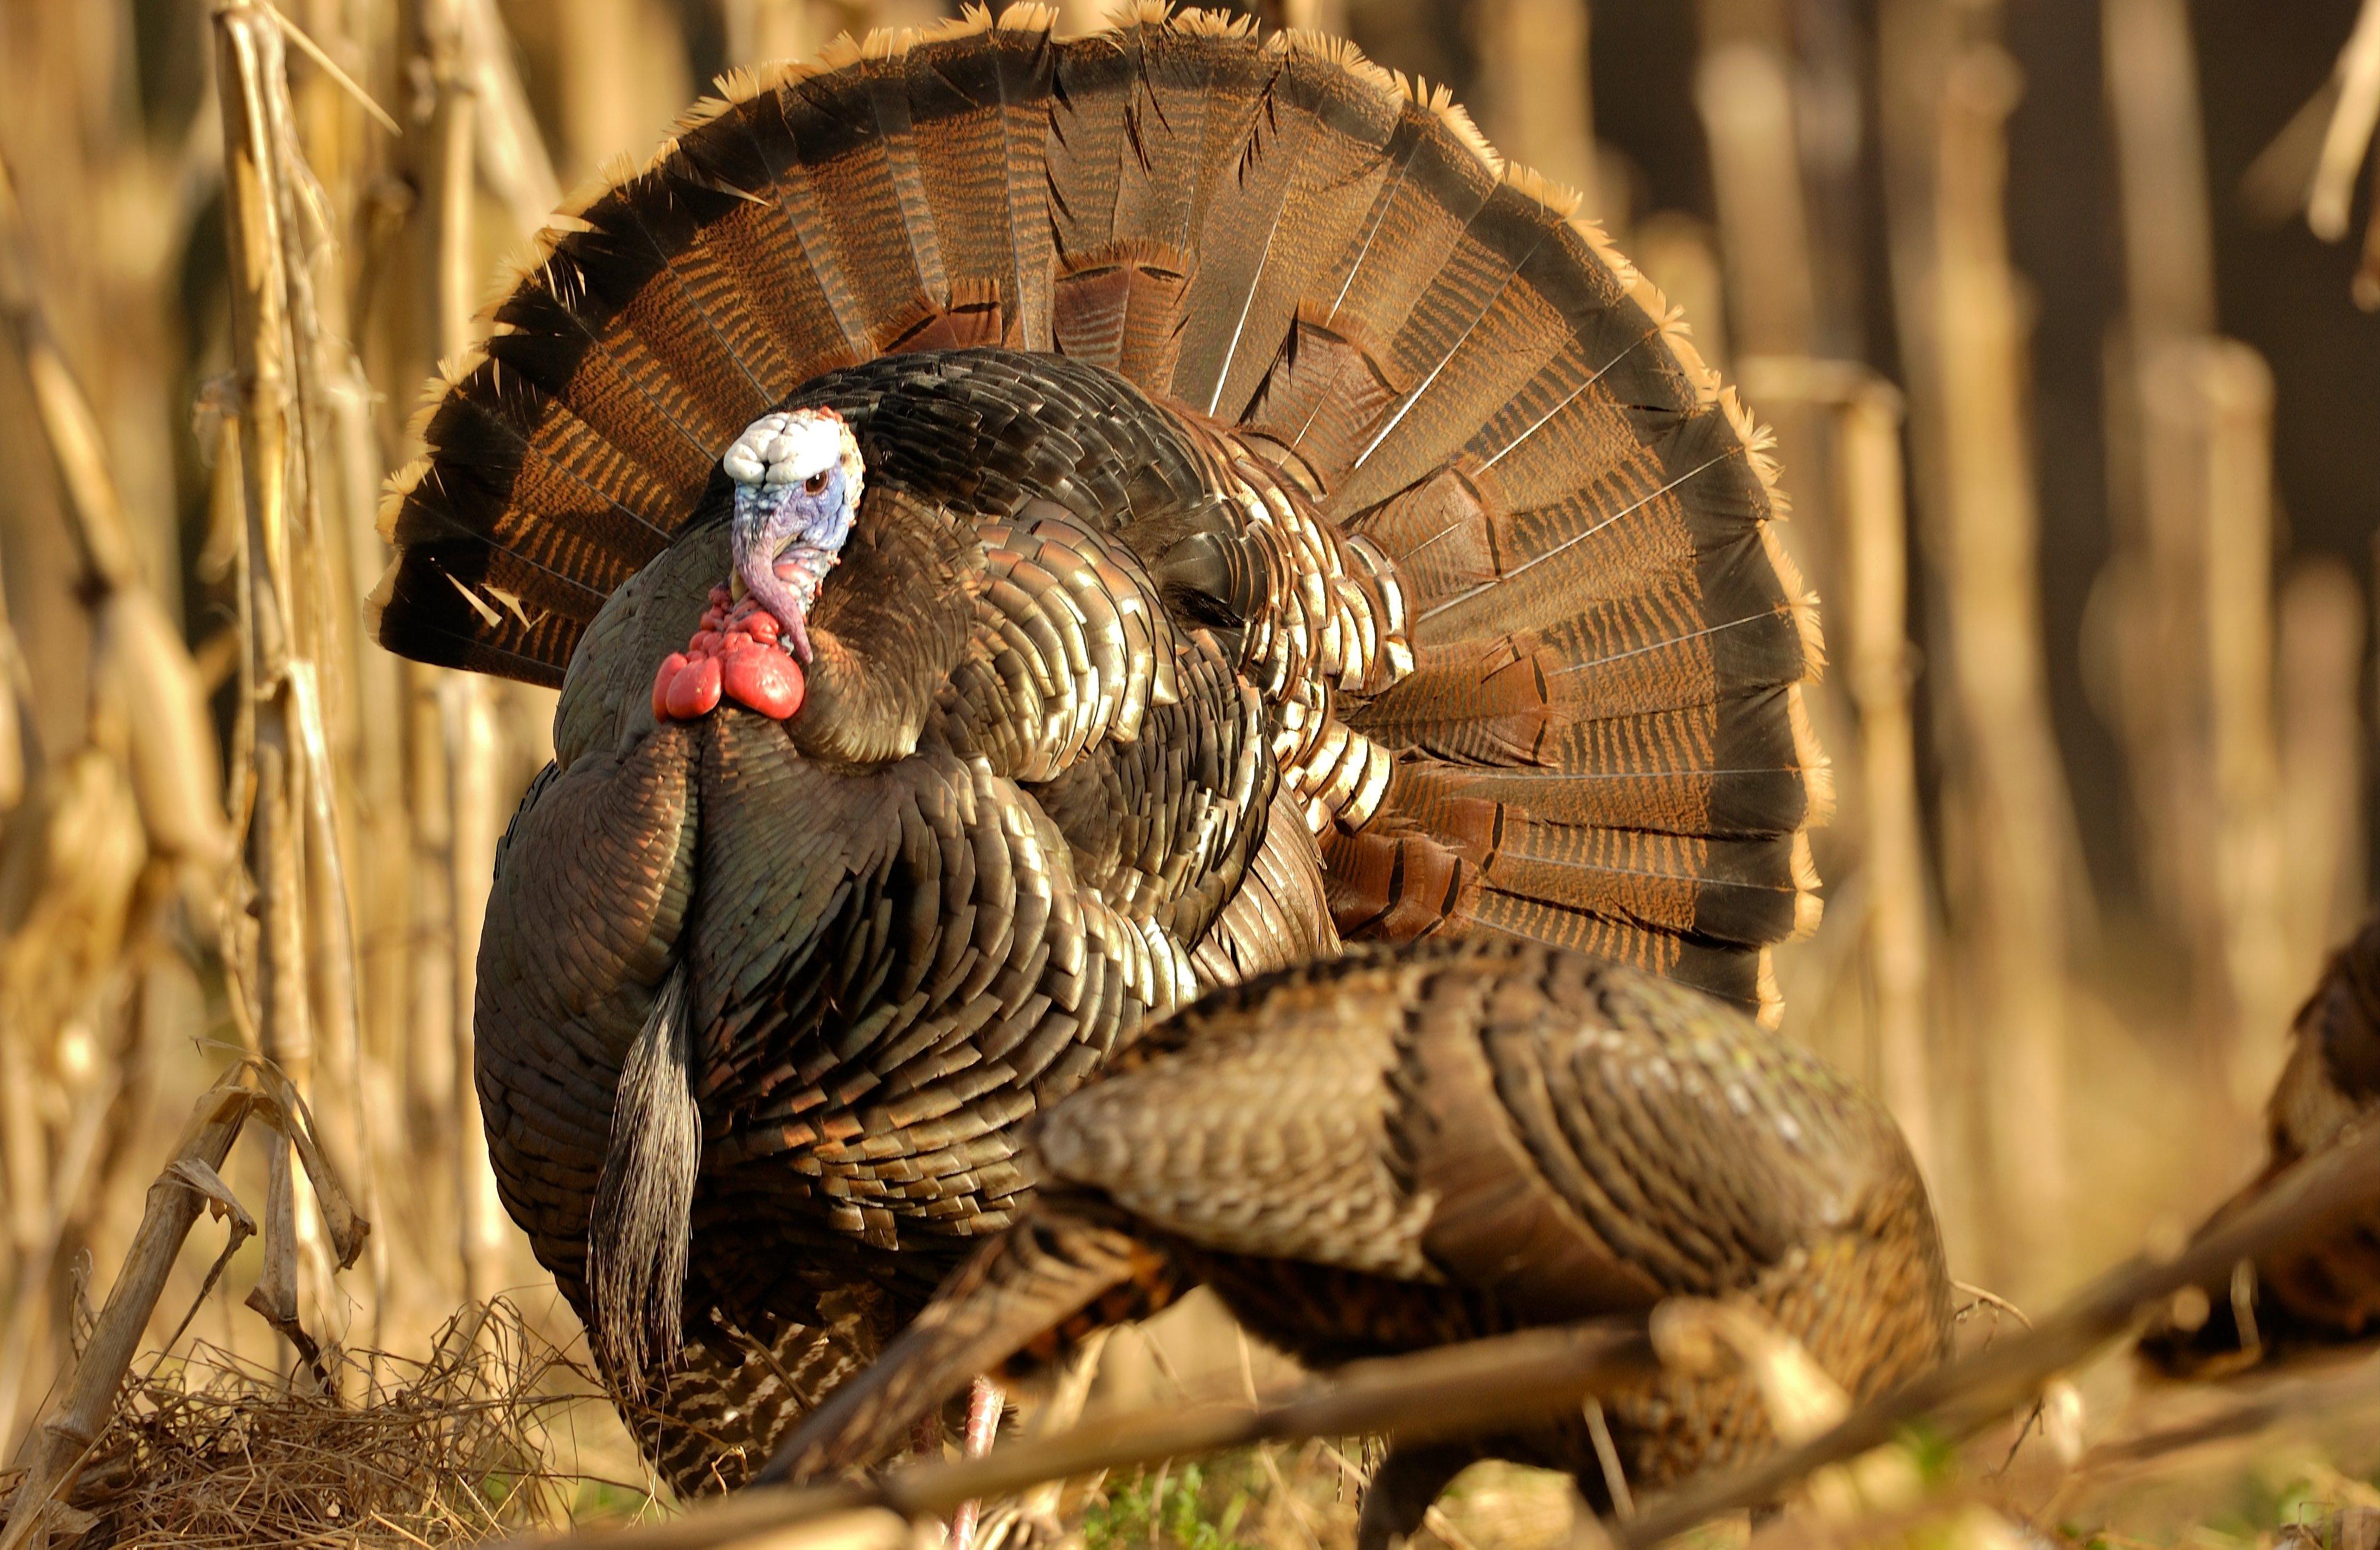 Turkey Hunting in Kansas. (c) Tes Randle Jolly photo